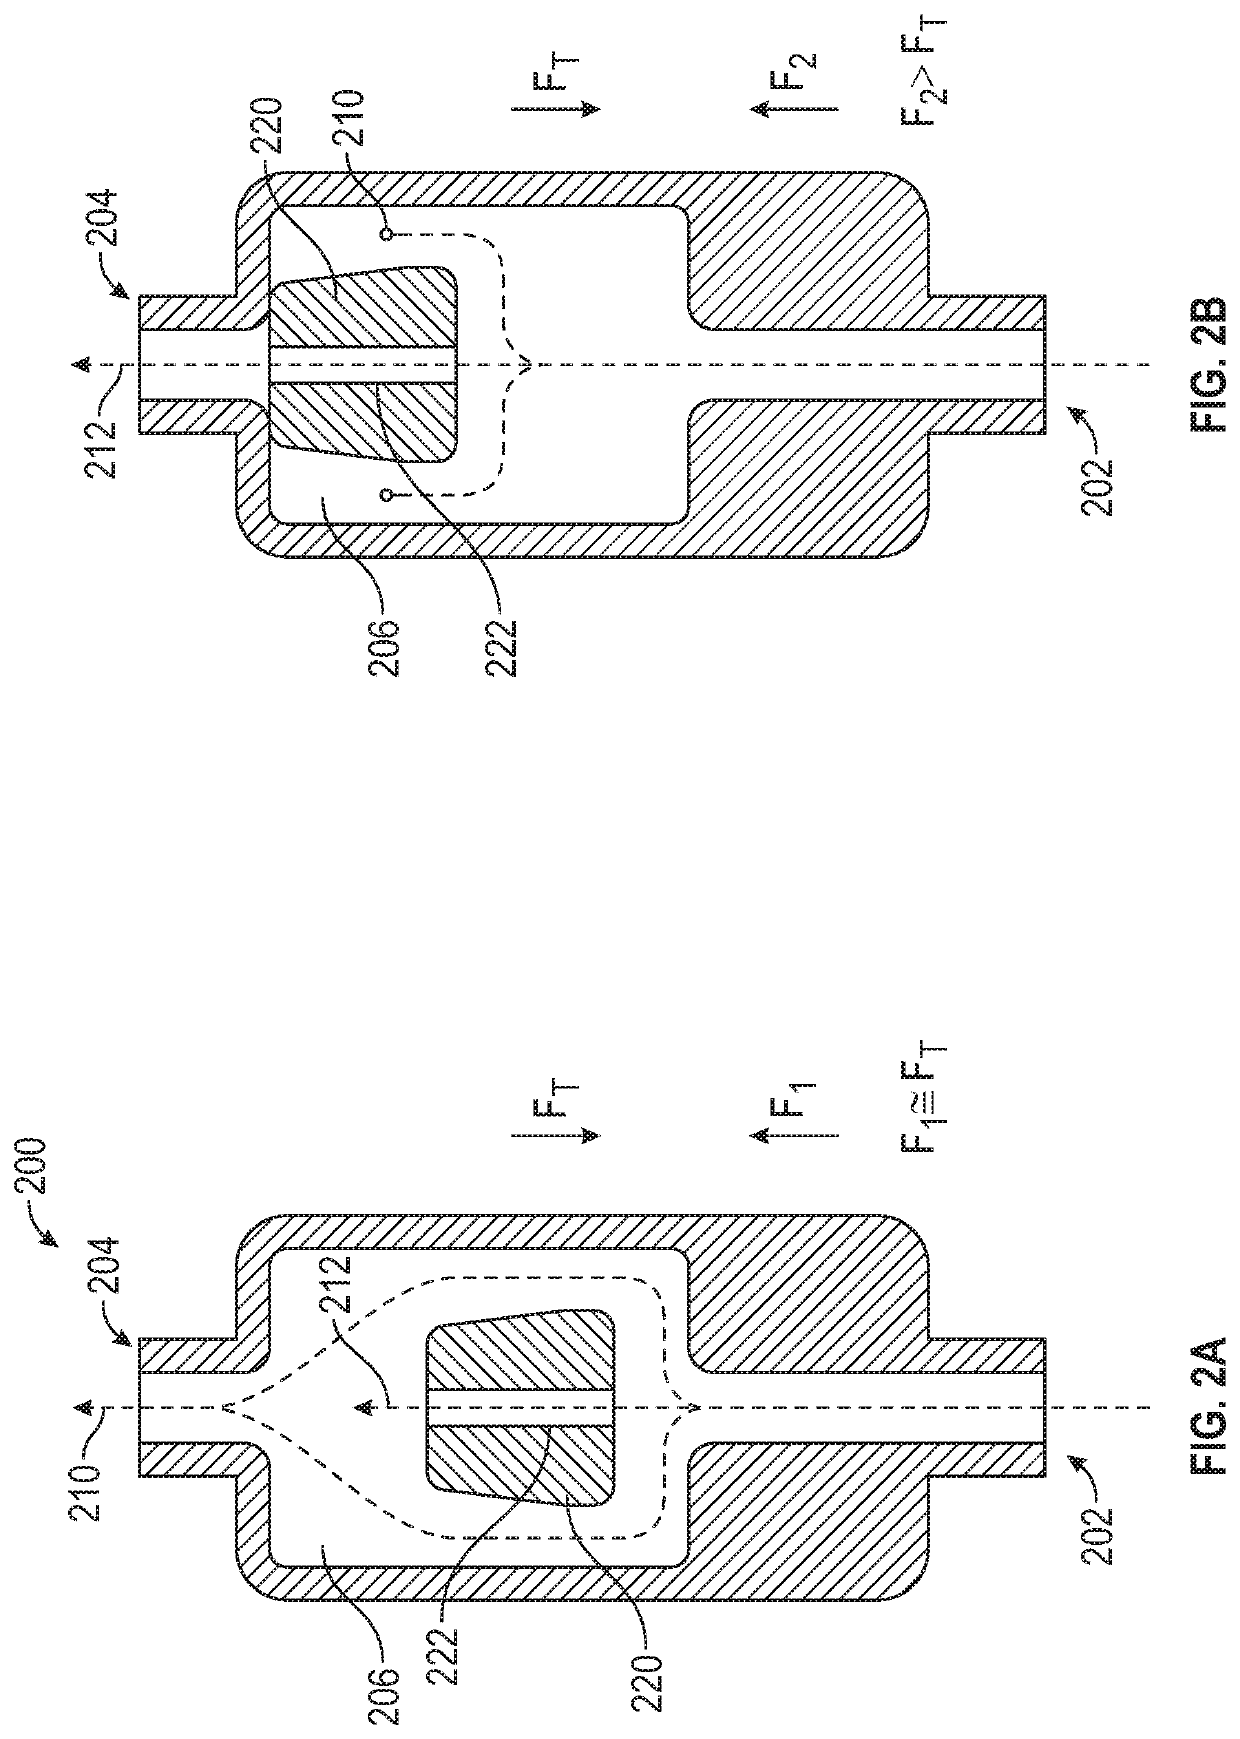 Pressure-driven flow rate control valves